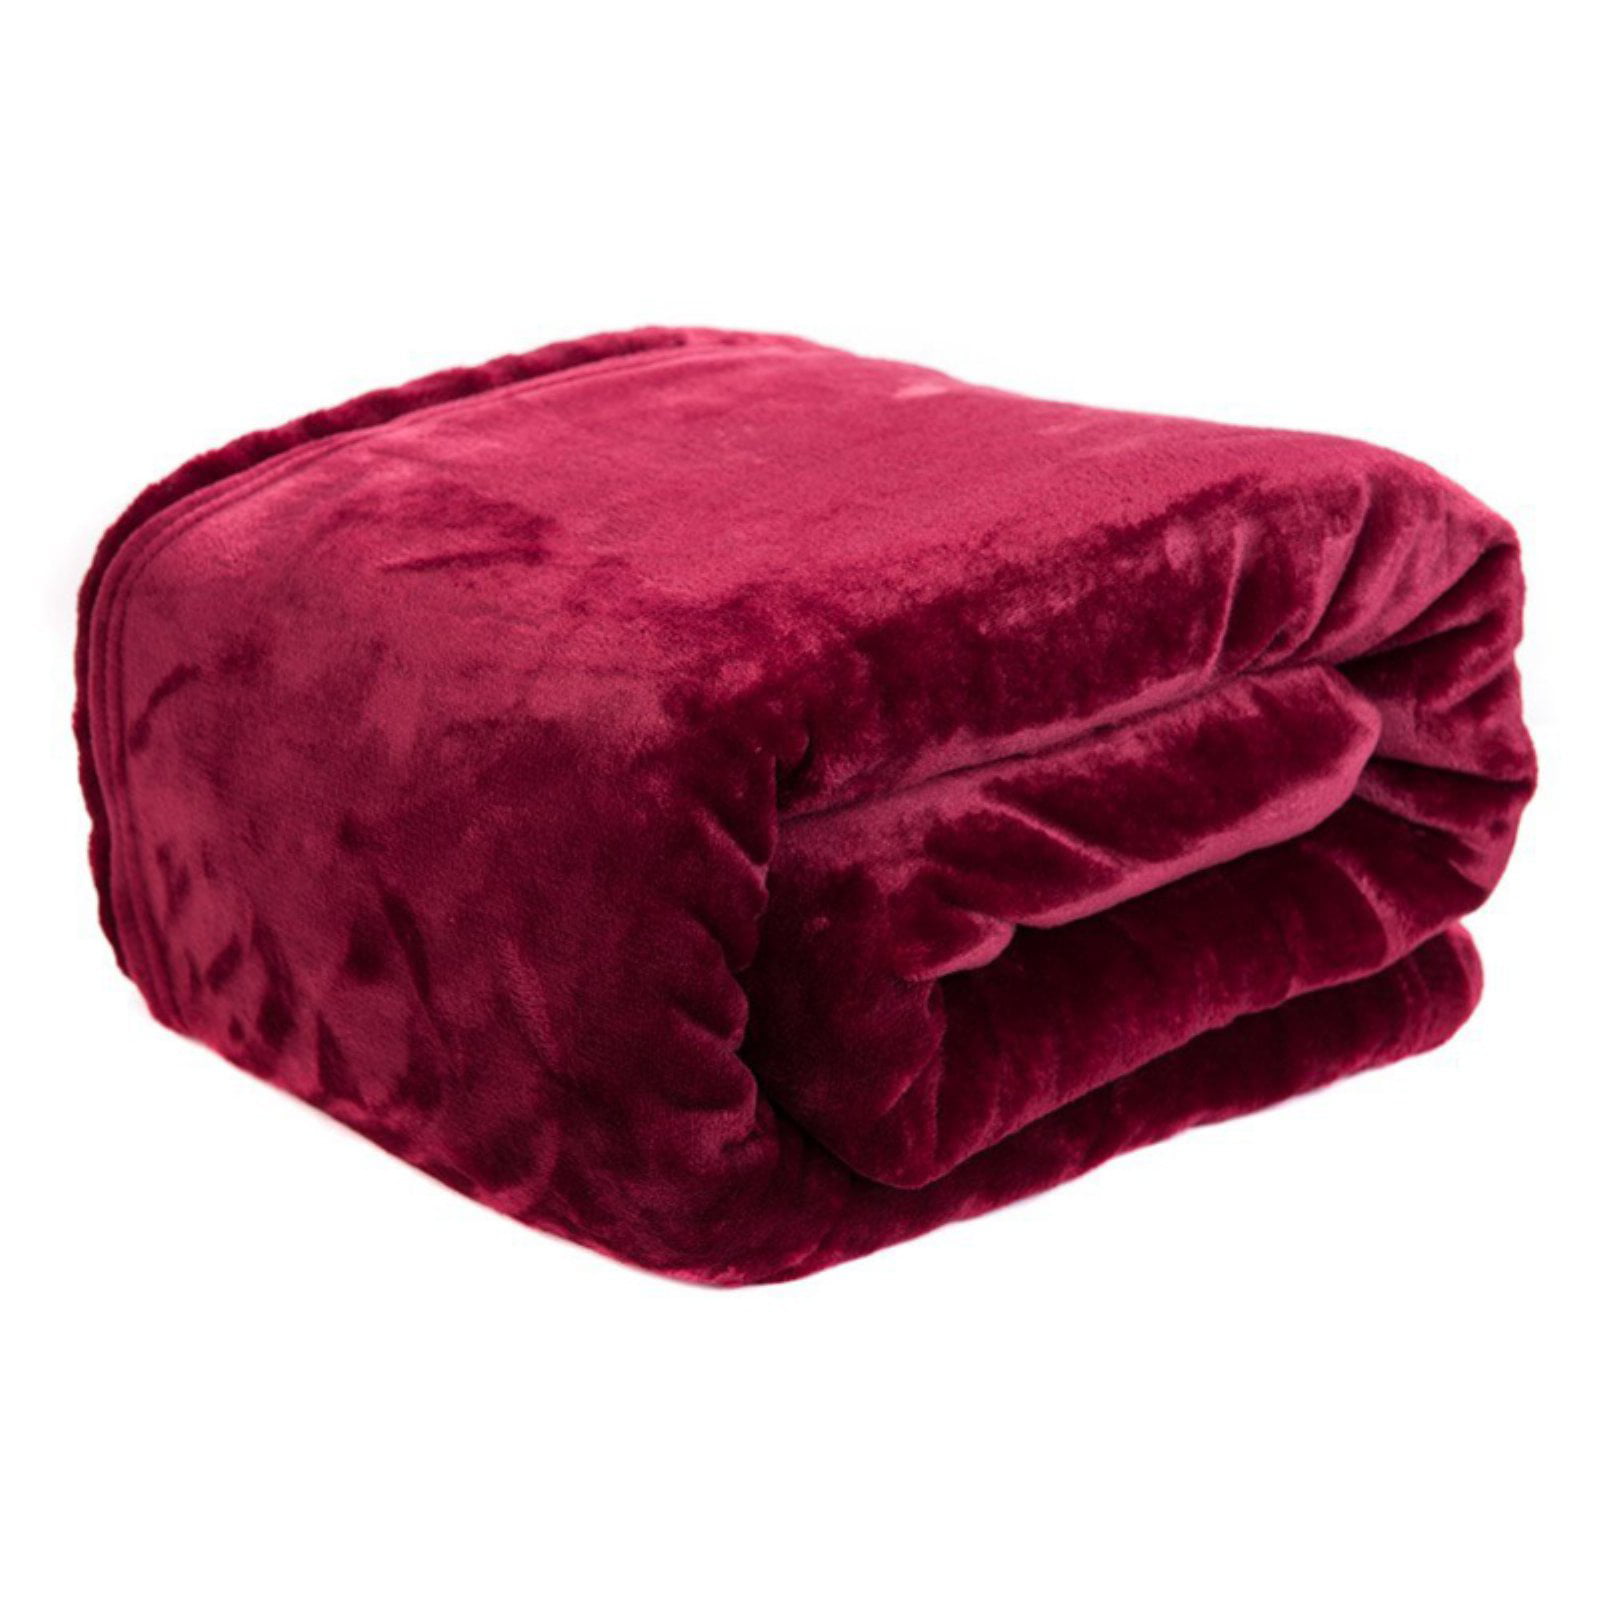 HYSEAS Velvet Plush Fleece Throw Blanket